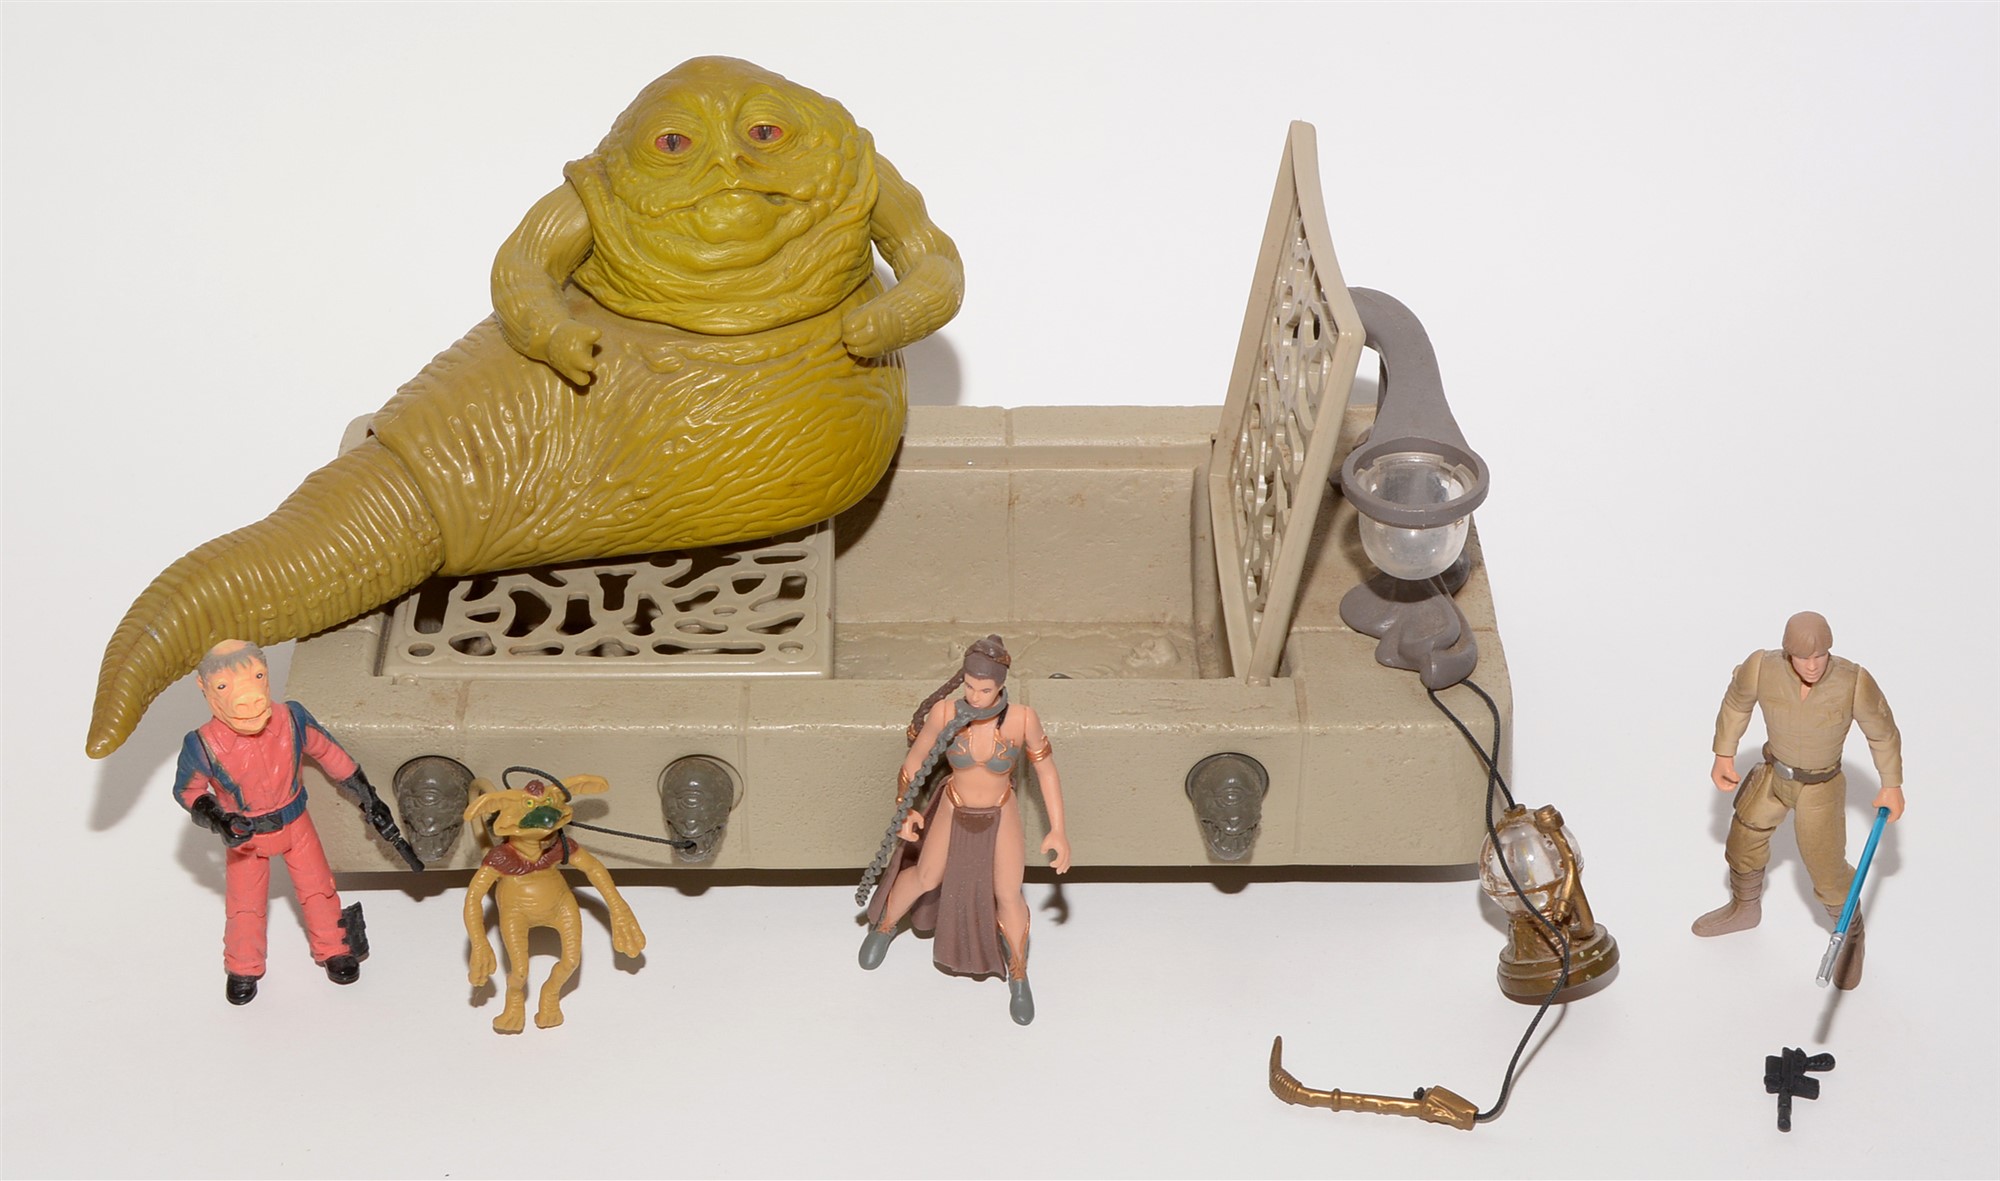 Star Wars figurines.